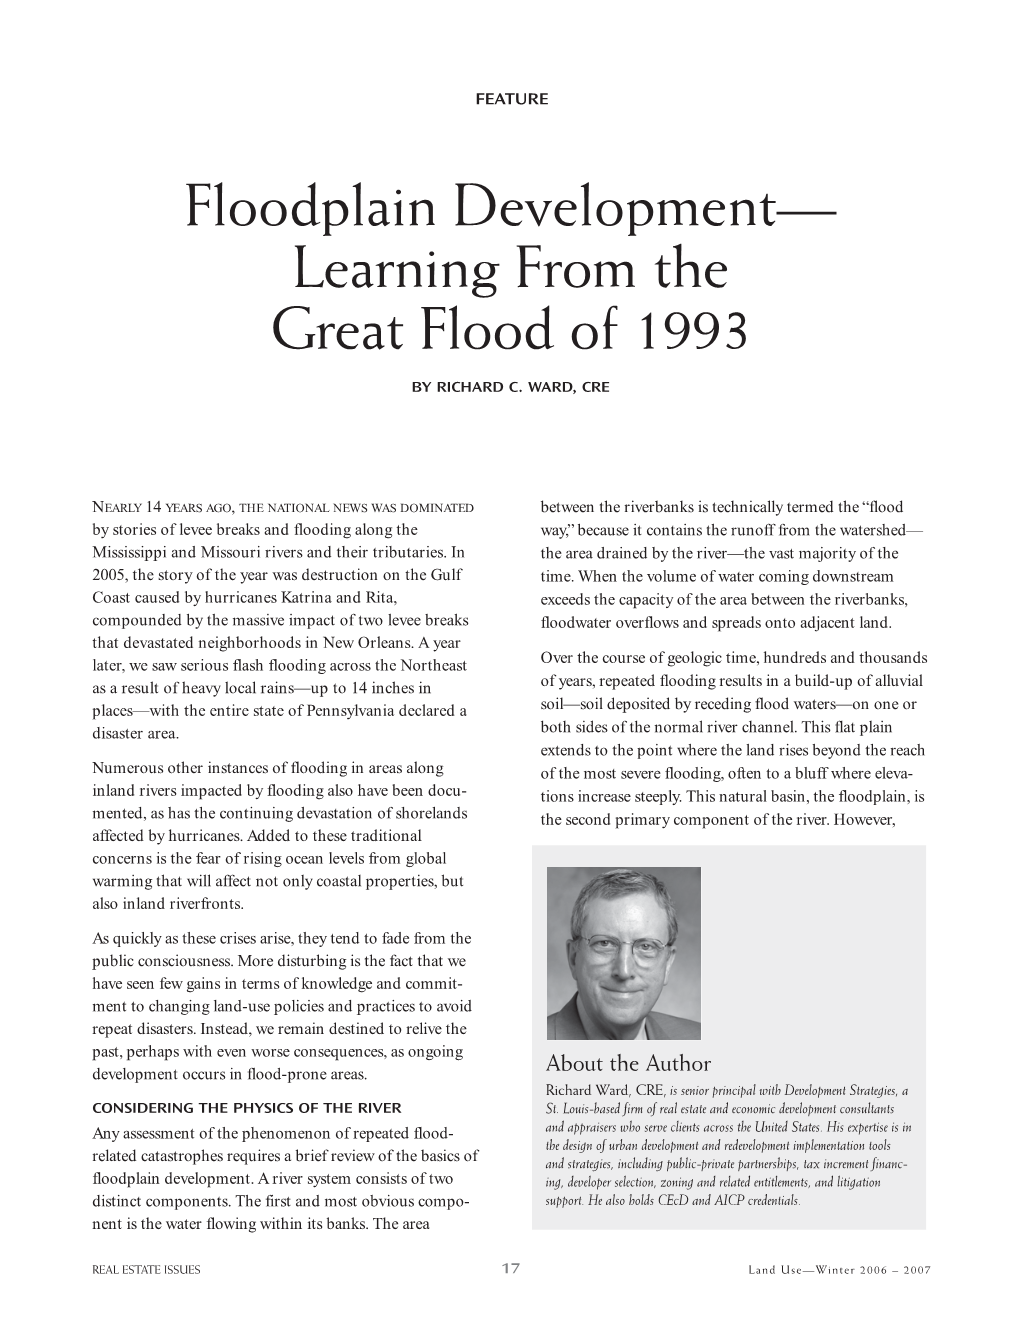 Floodplain Development— Learning from the Great Flood of 1993